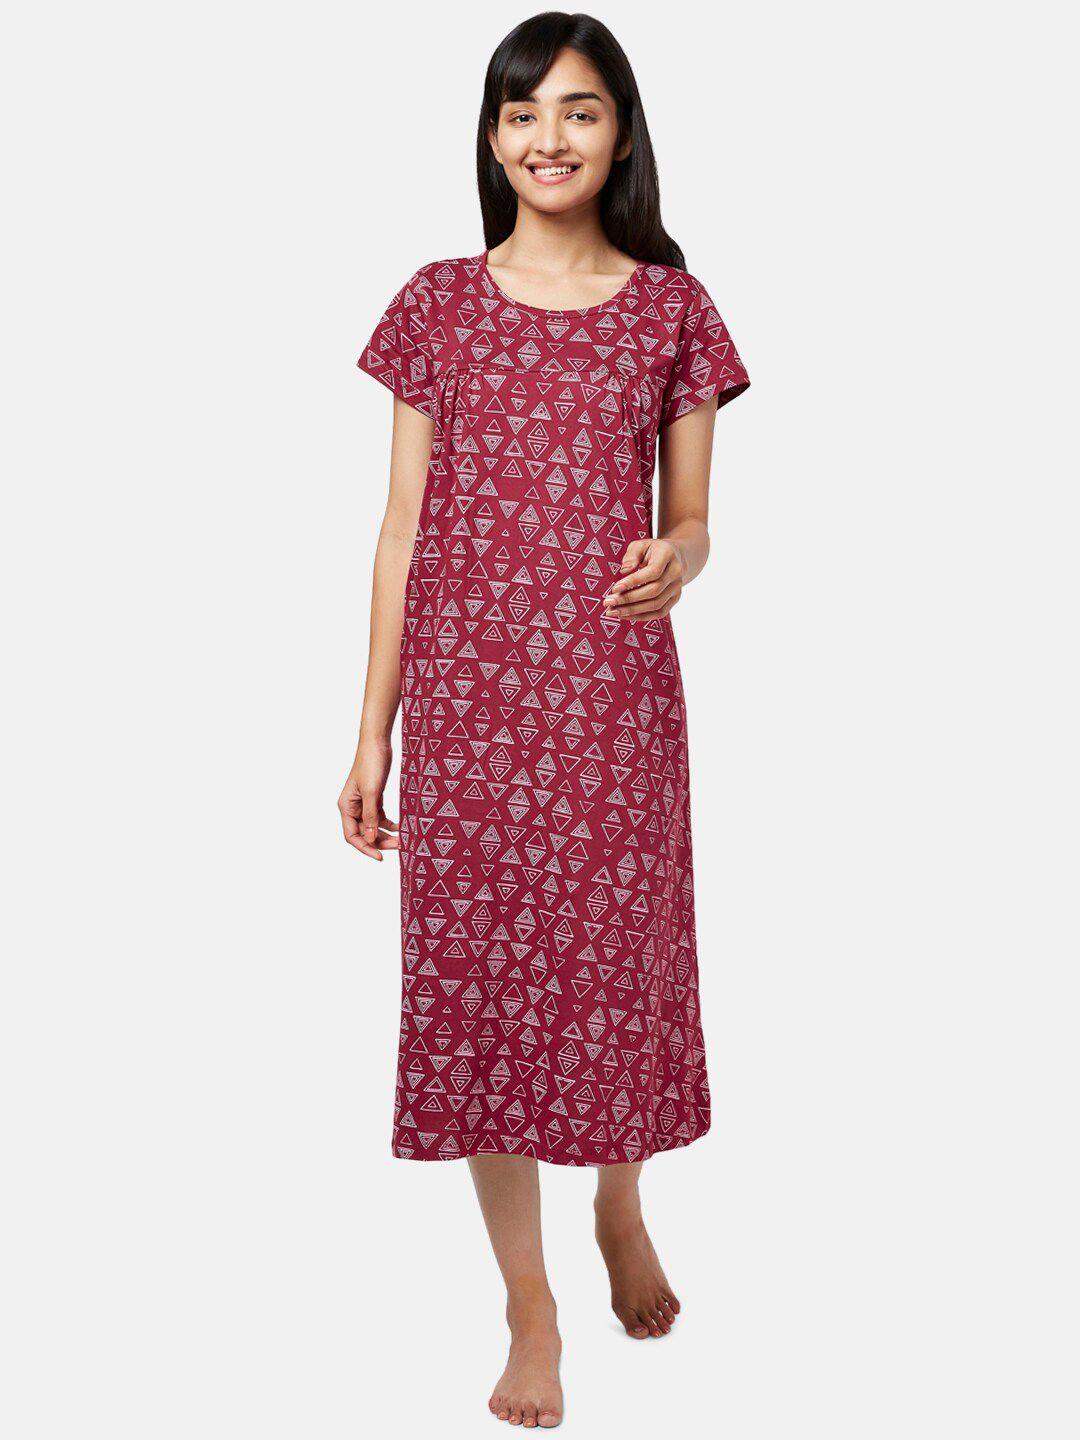 yu by pantaloons women burgundy geometric printed nightdress